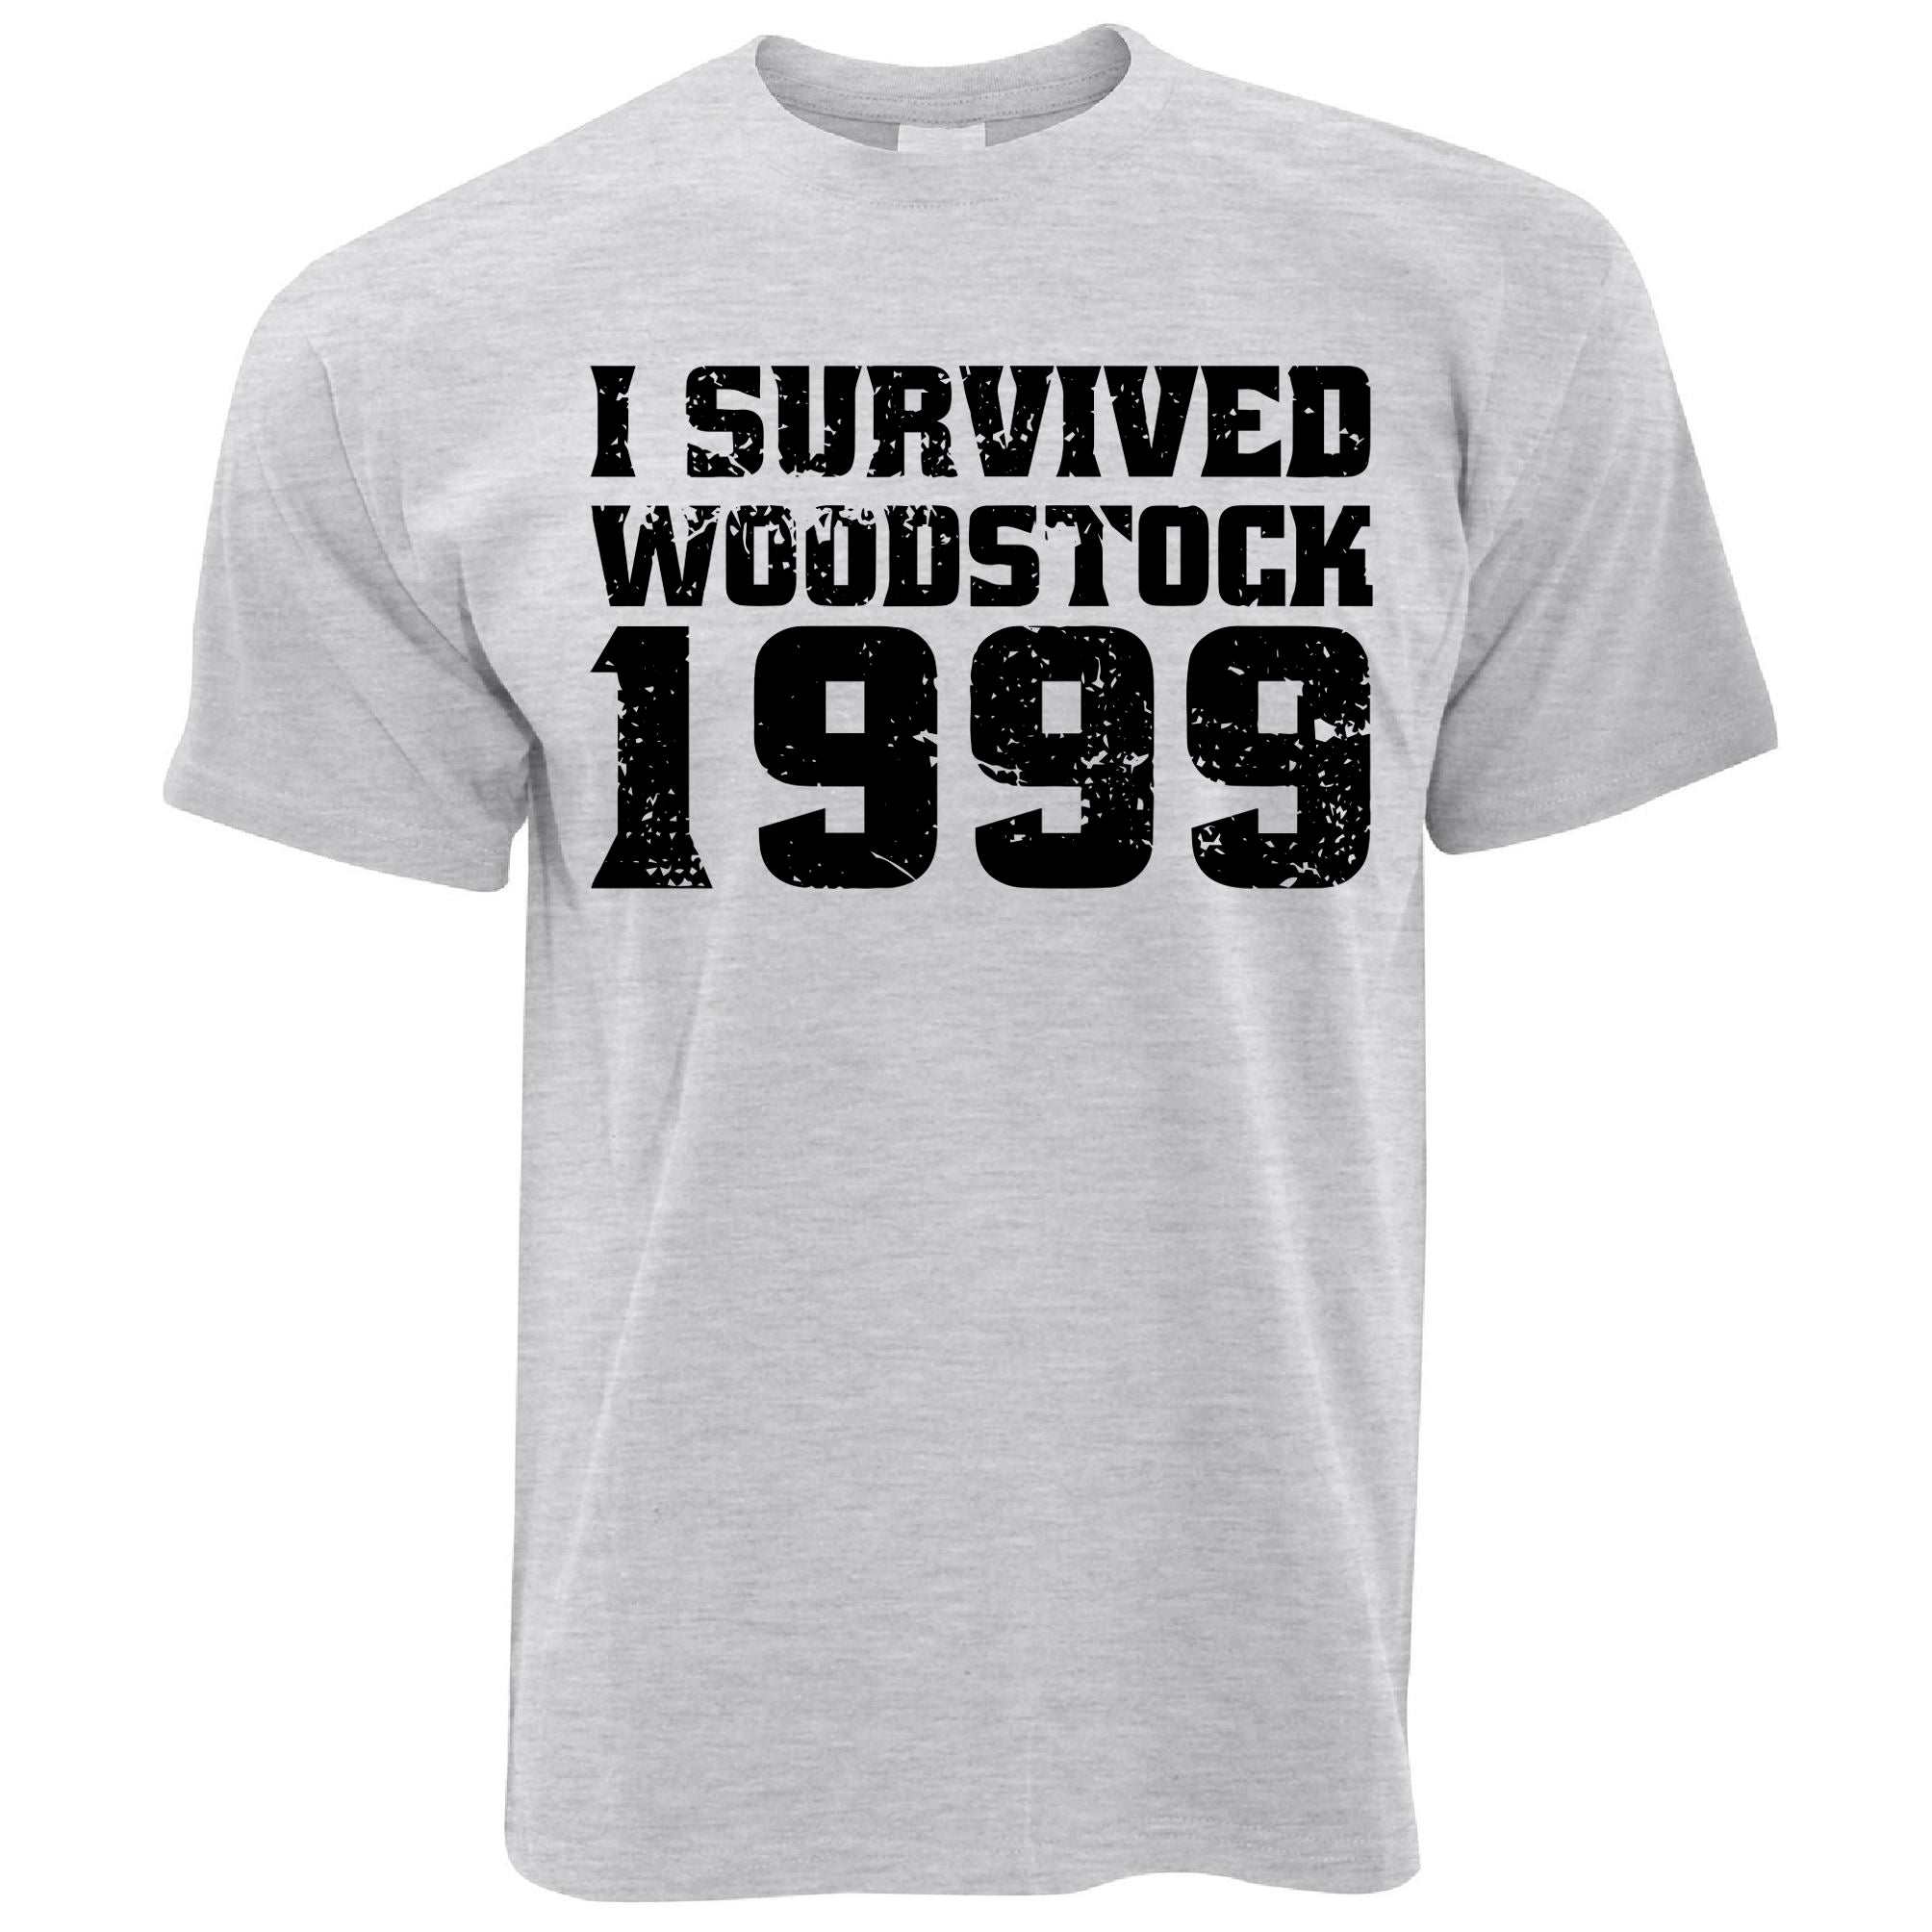 I Survived Woodstock 1999 T Shirt